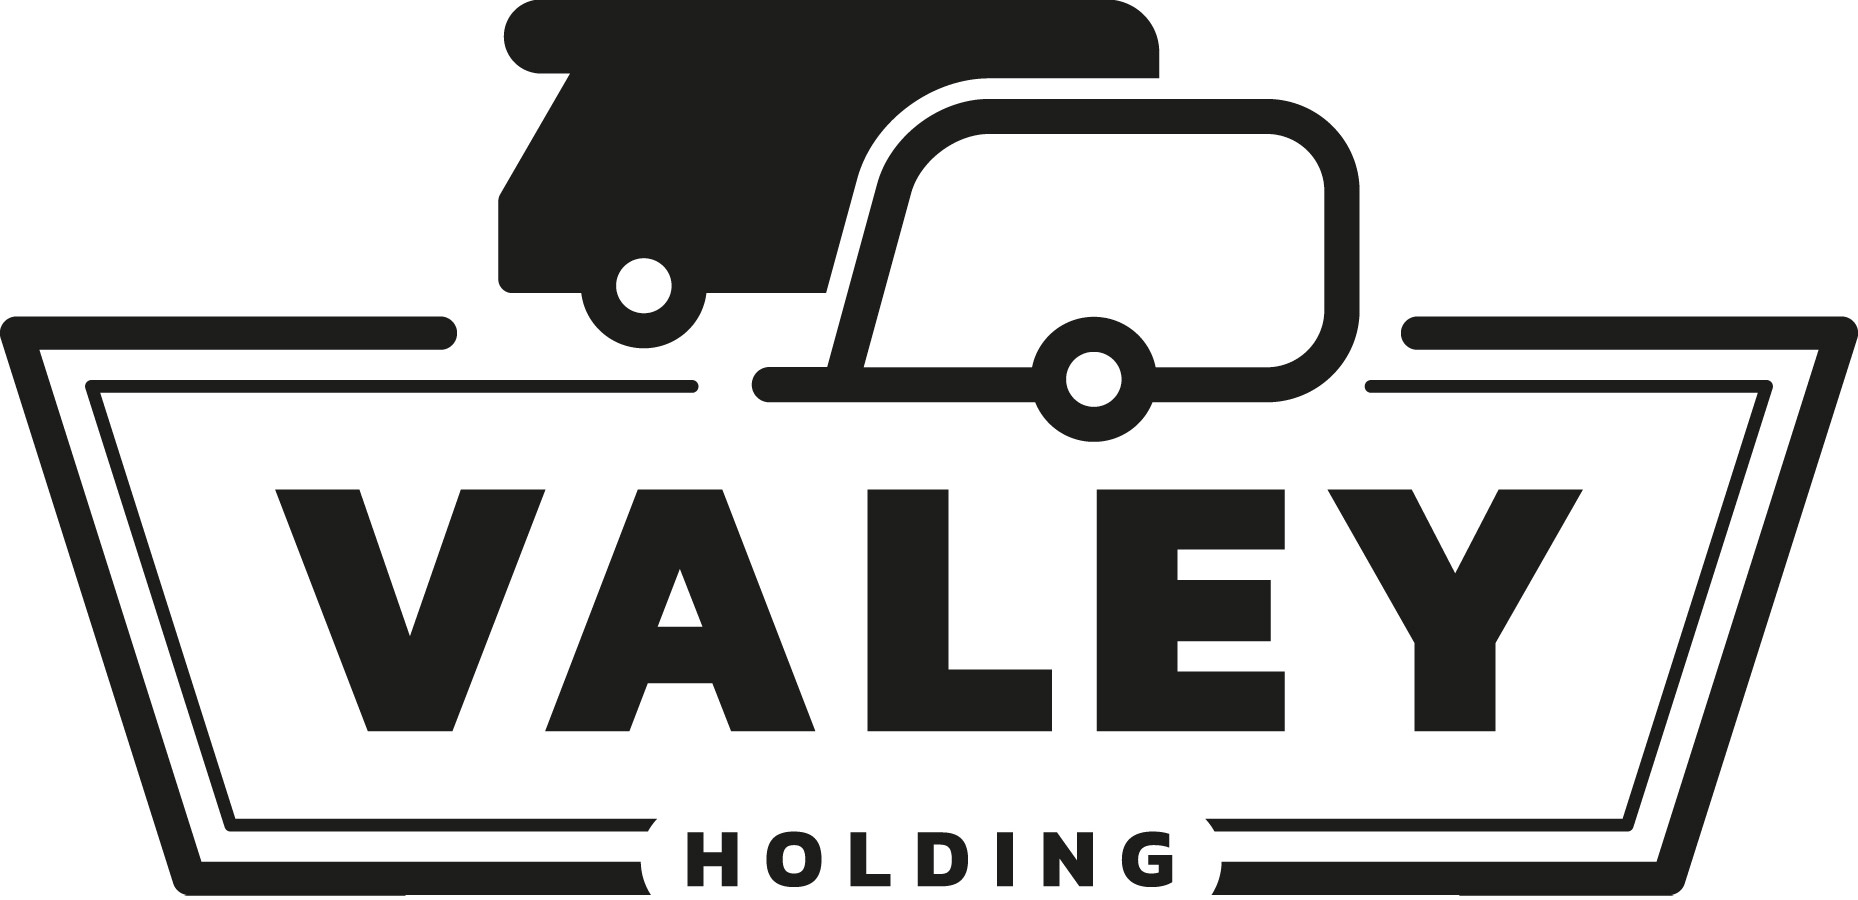 Ontwerp Valey Holding logo